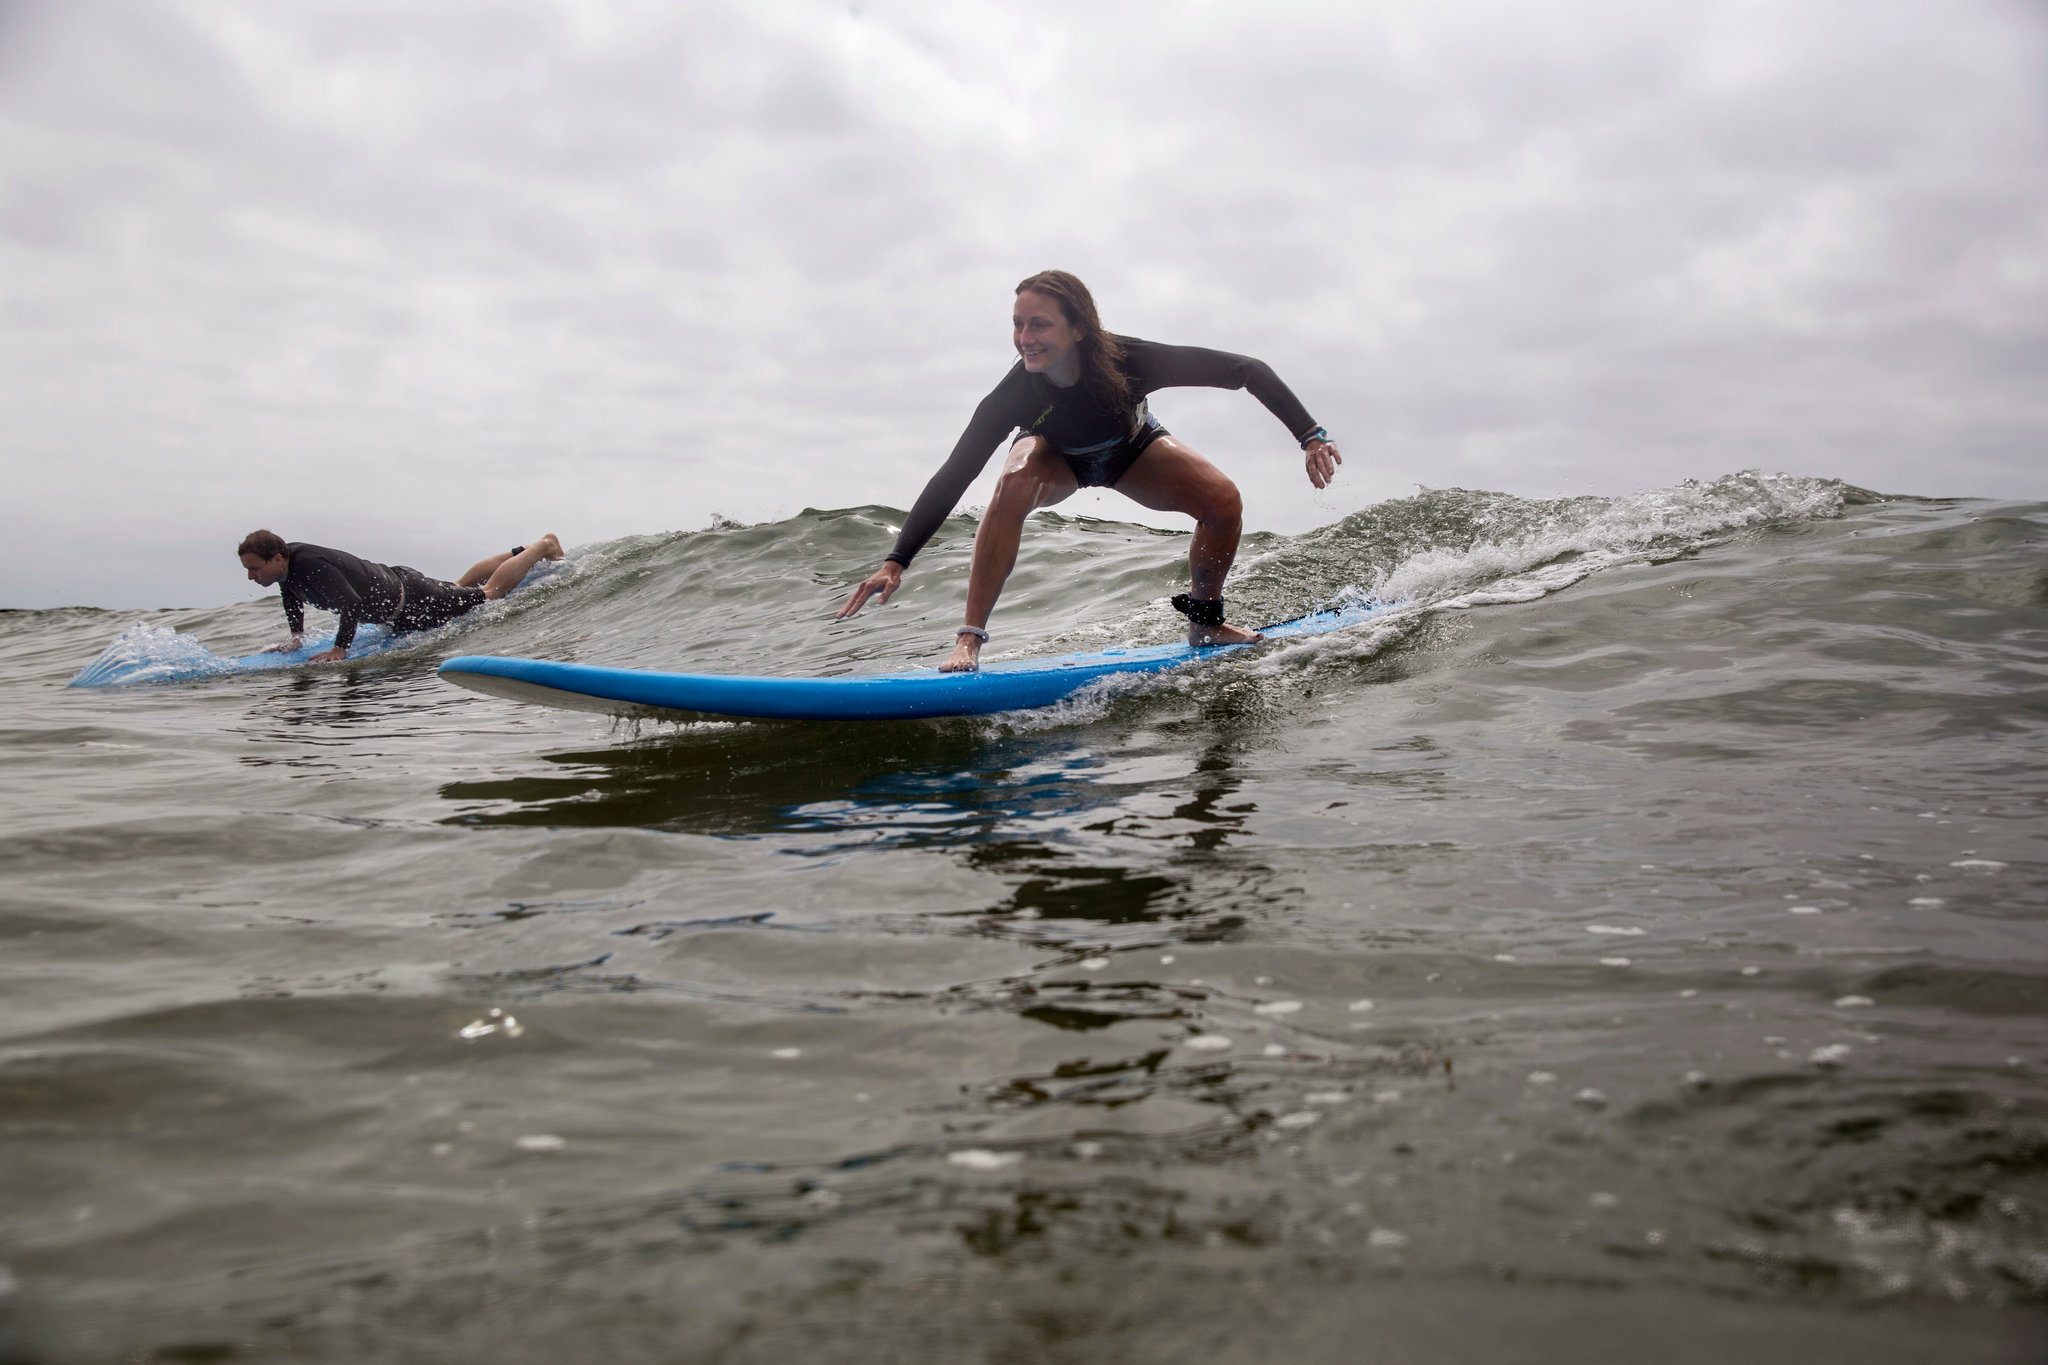 Maintaining balance on your surfboard